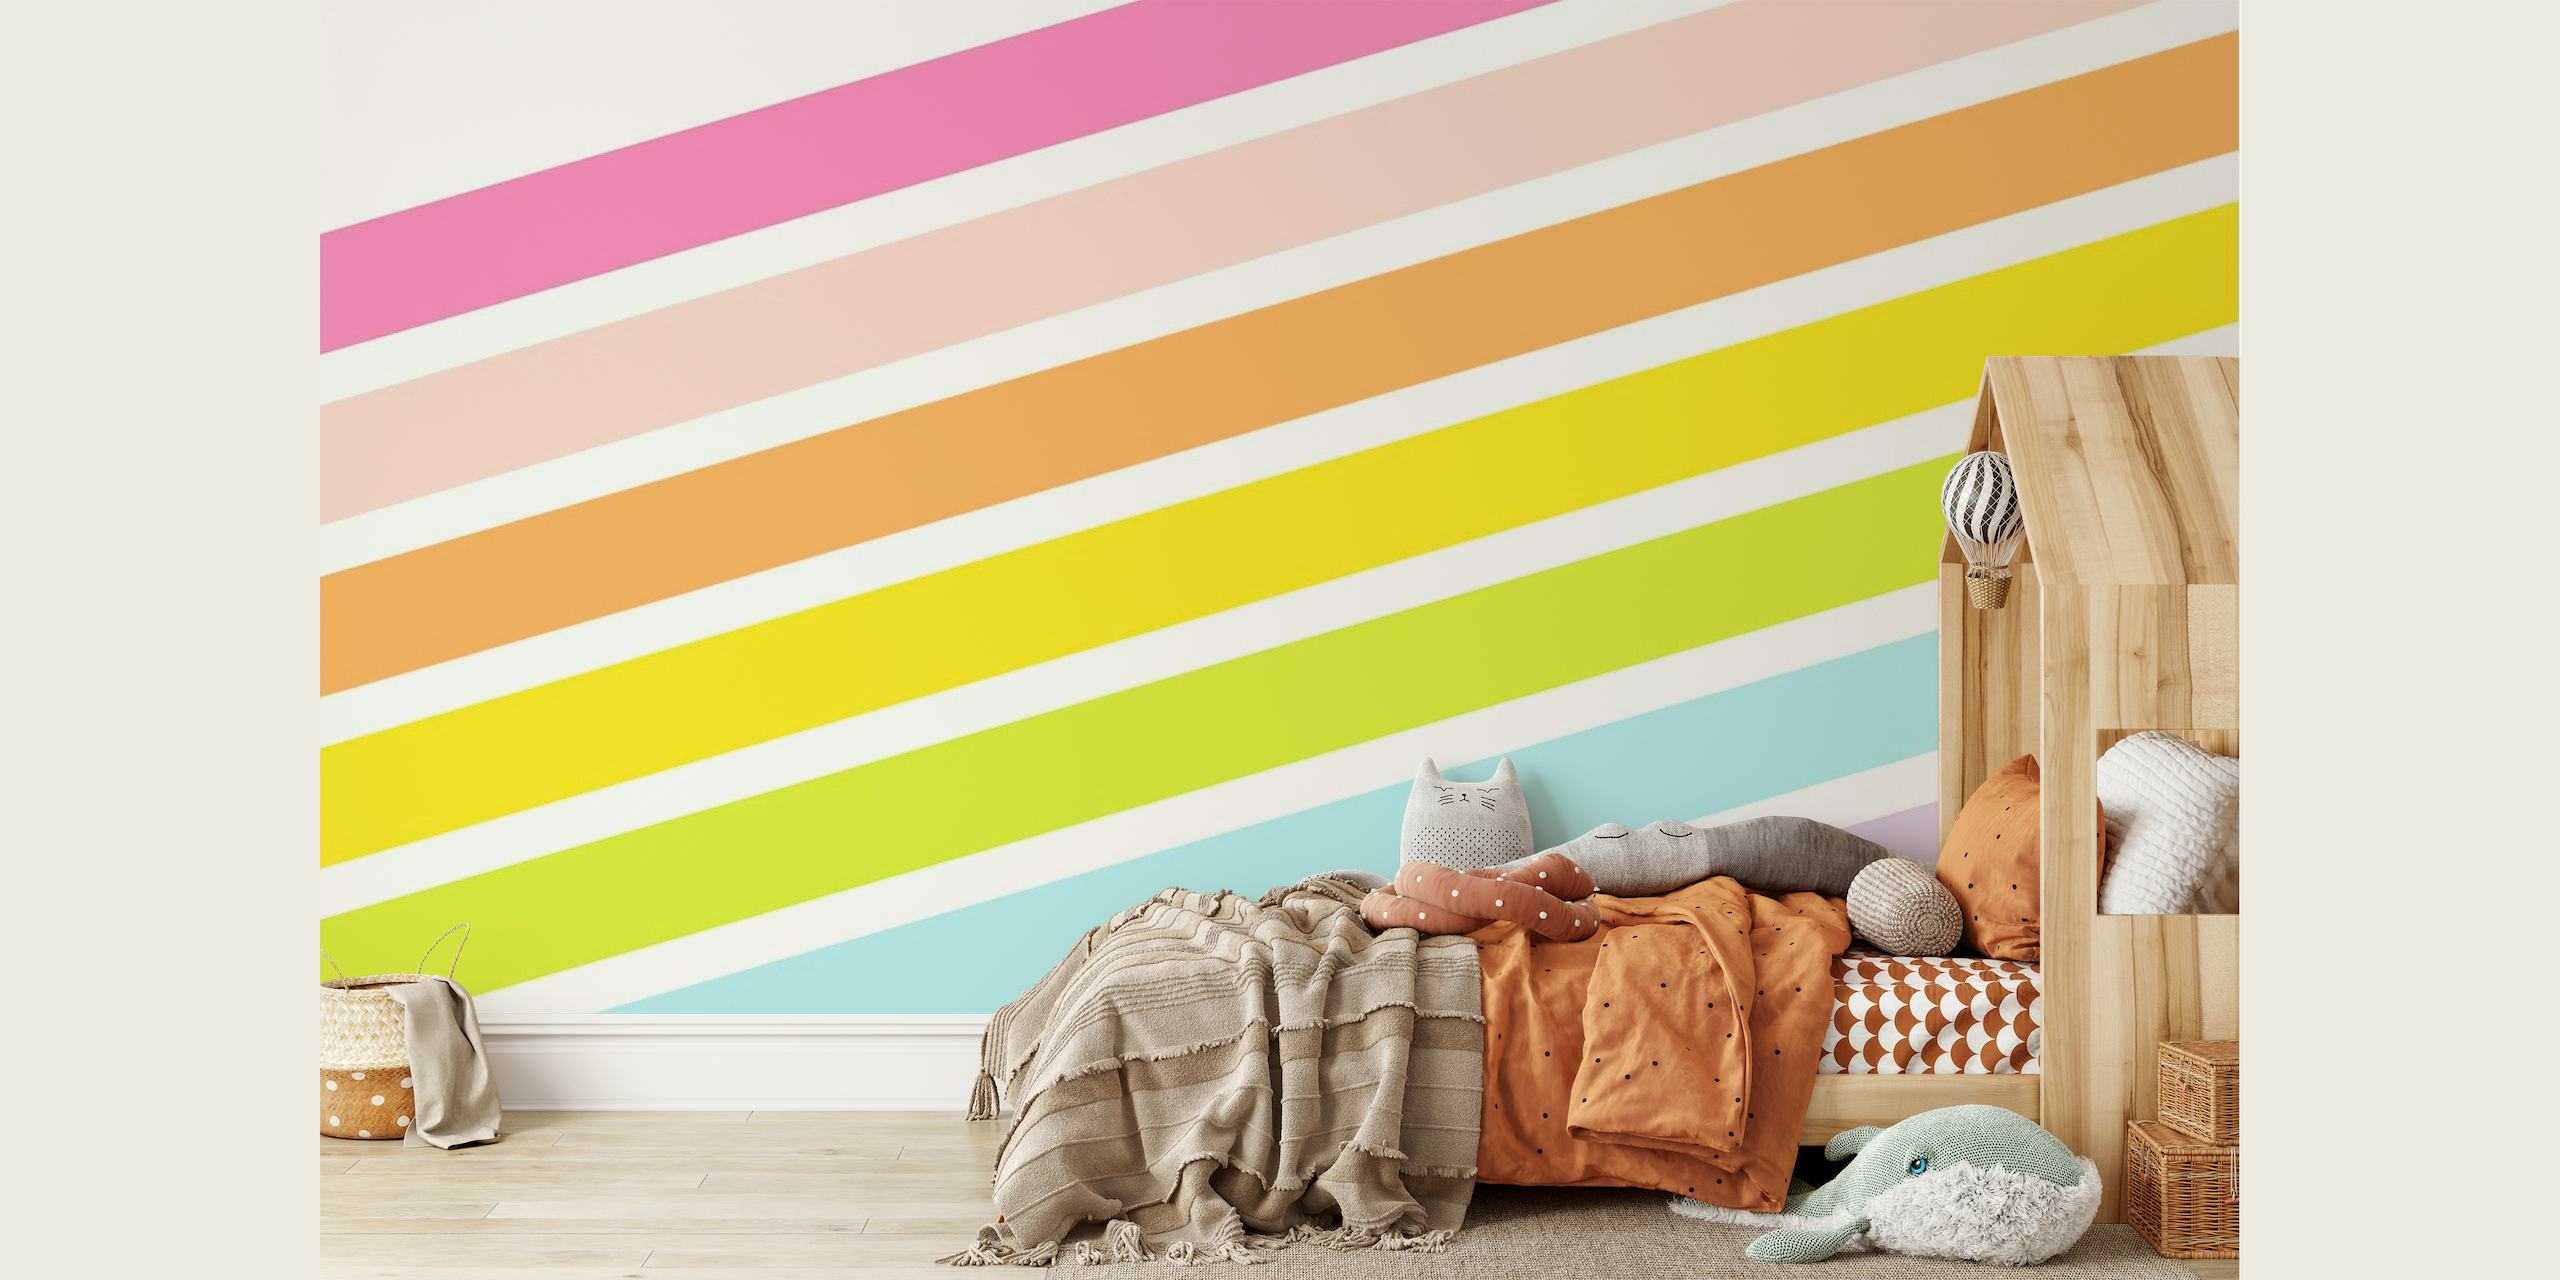 Mural de pared con vibrantes y coloridas rayas de arcoíris en un patrón diagonal